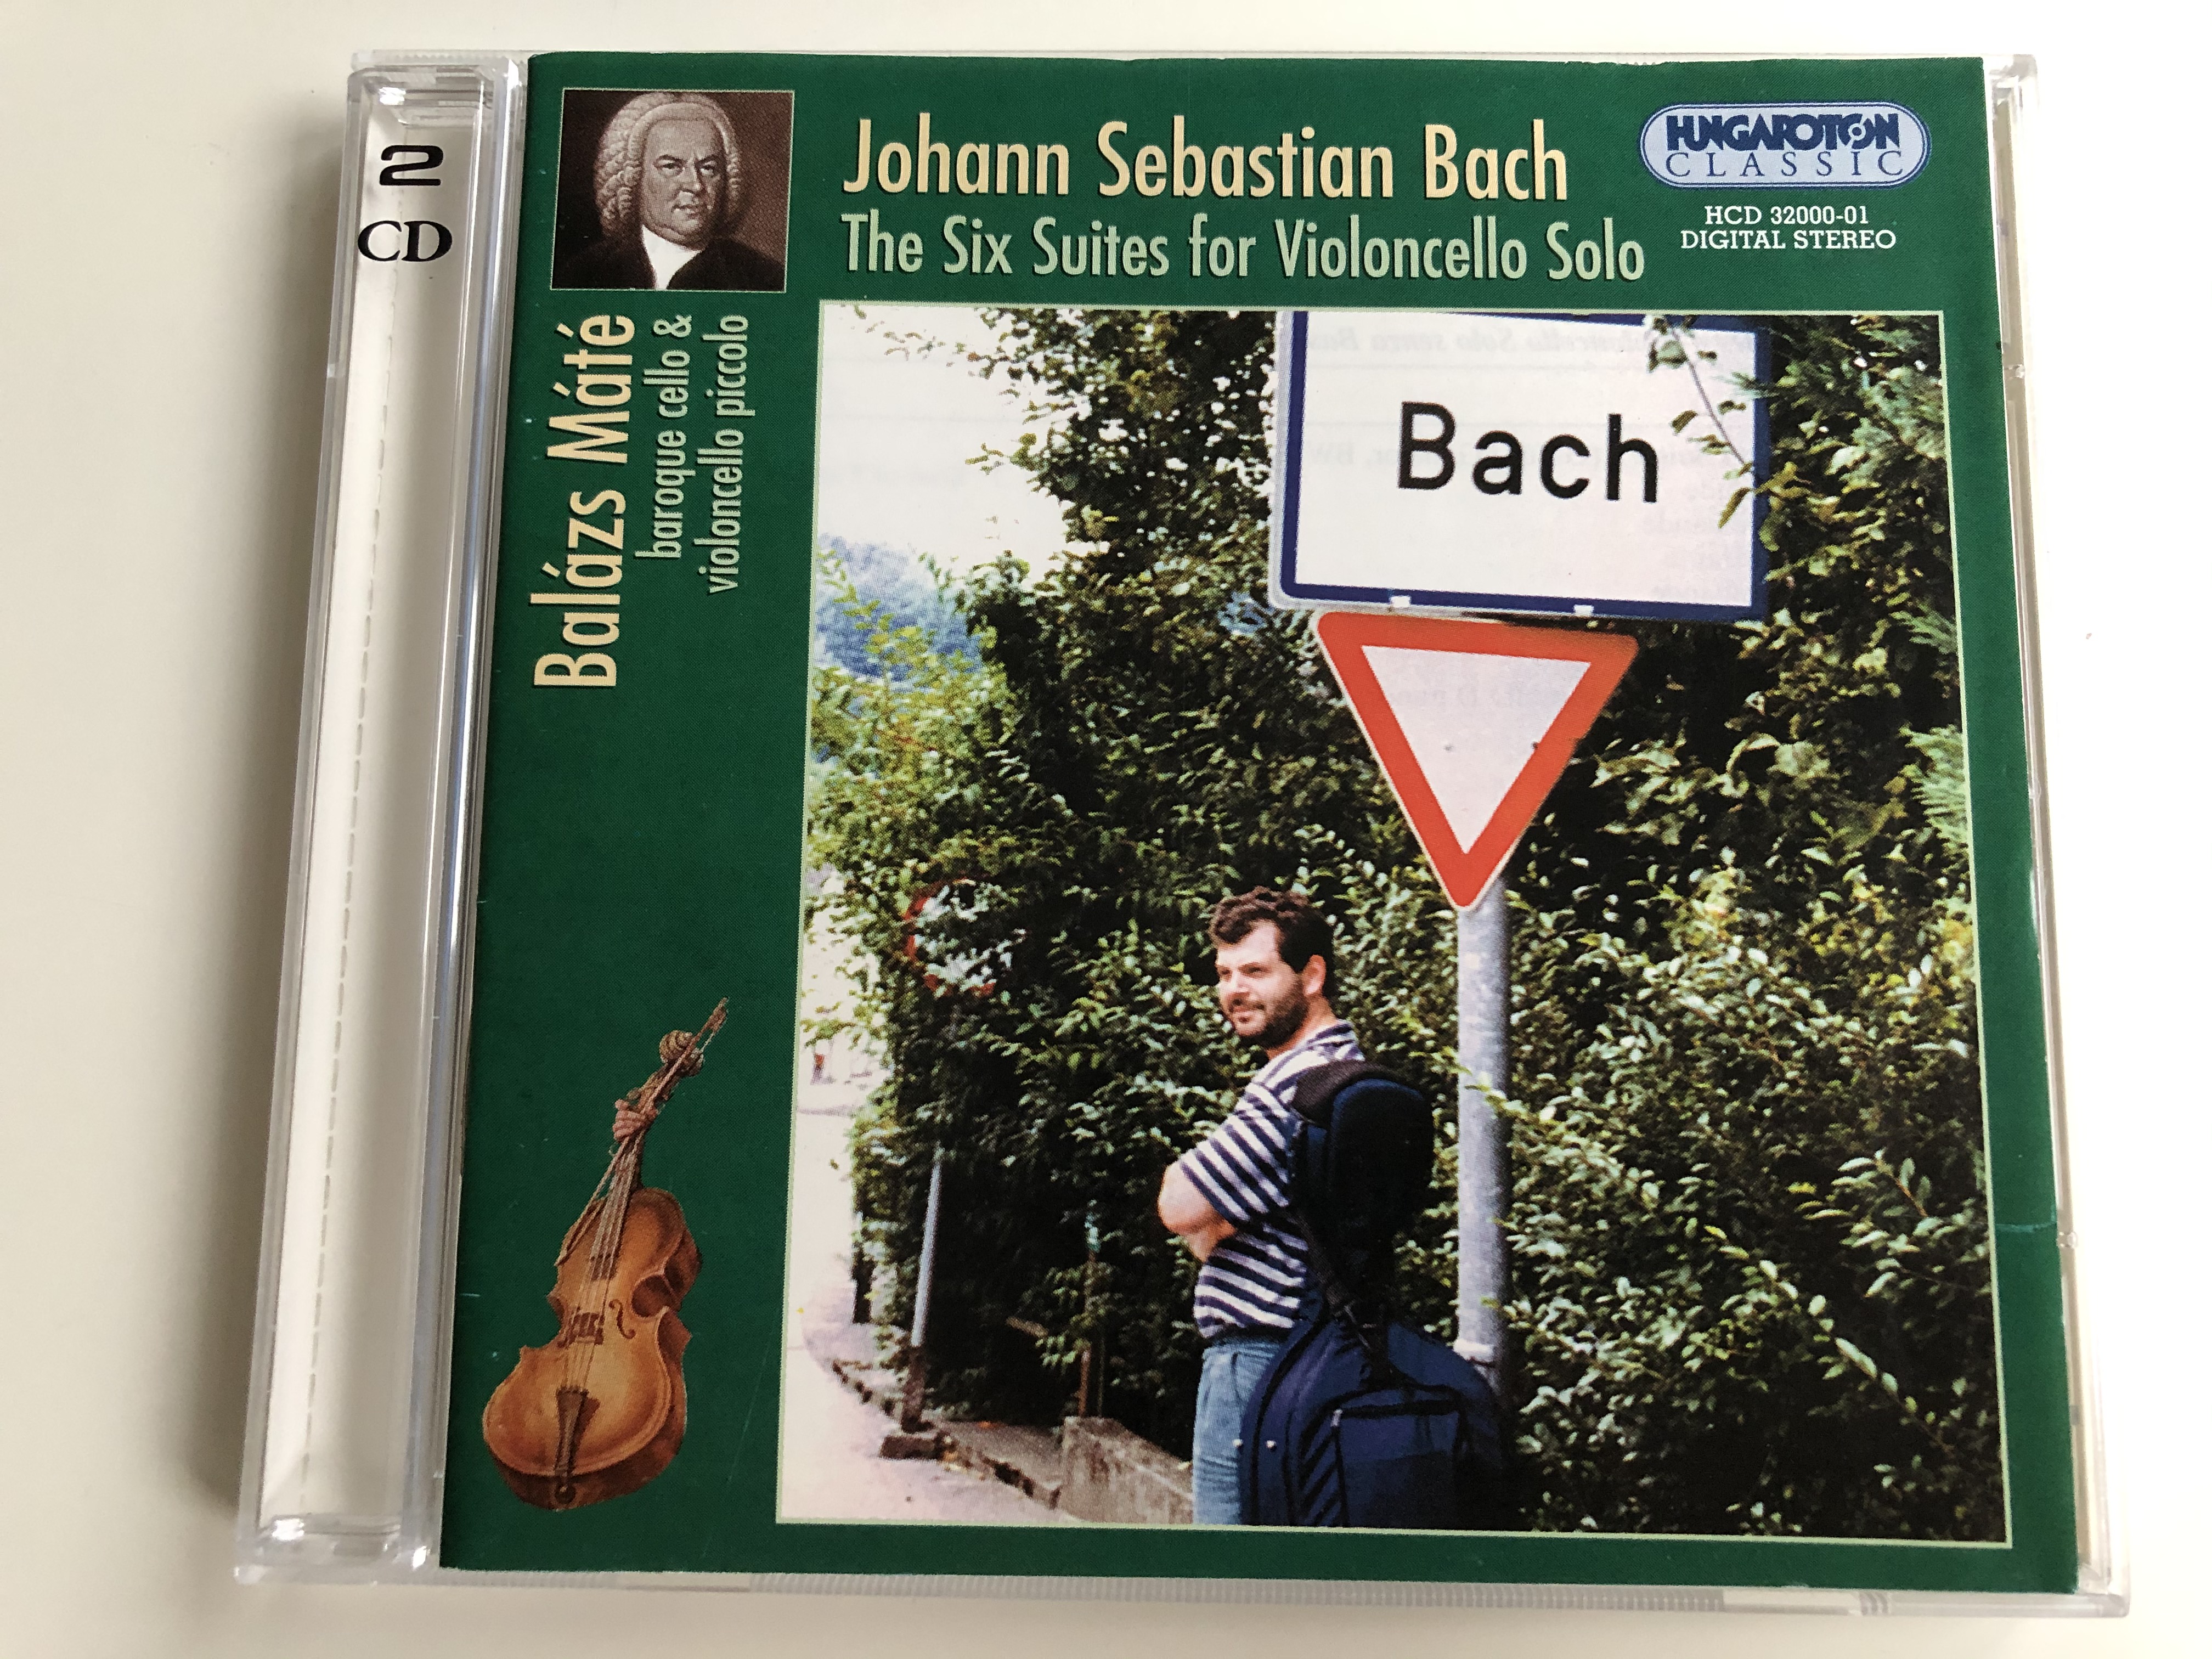 johann-sebastian-bach-the-six-suites-for-violoncello-solo-balazs-mate-baroque-cello-violoncello-picolo-hungaroton-classic-2x-audio-cd-2000-stereo-hcd-32000-01-1-.jpg